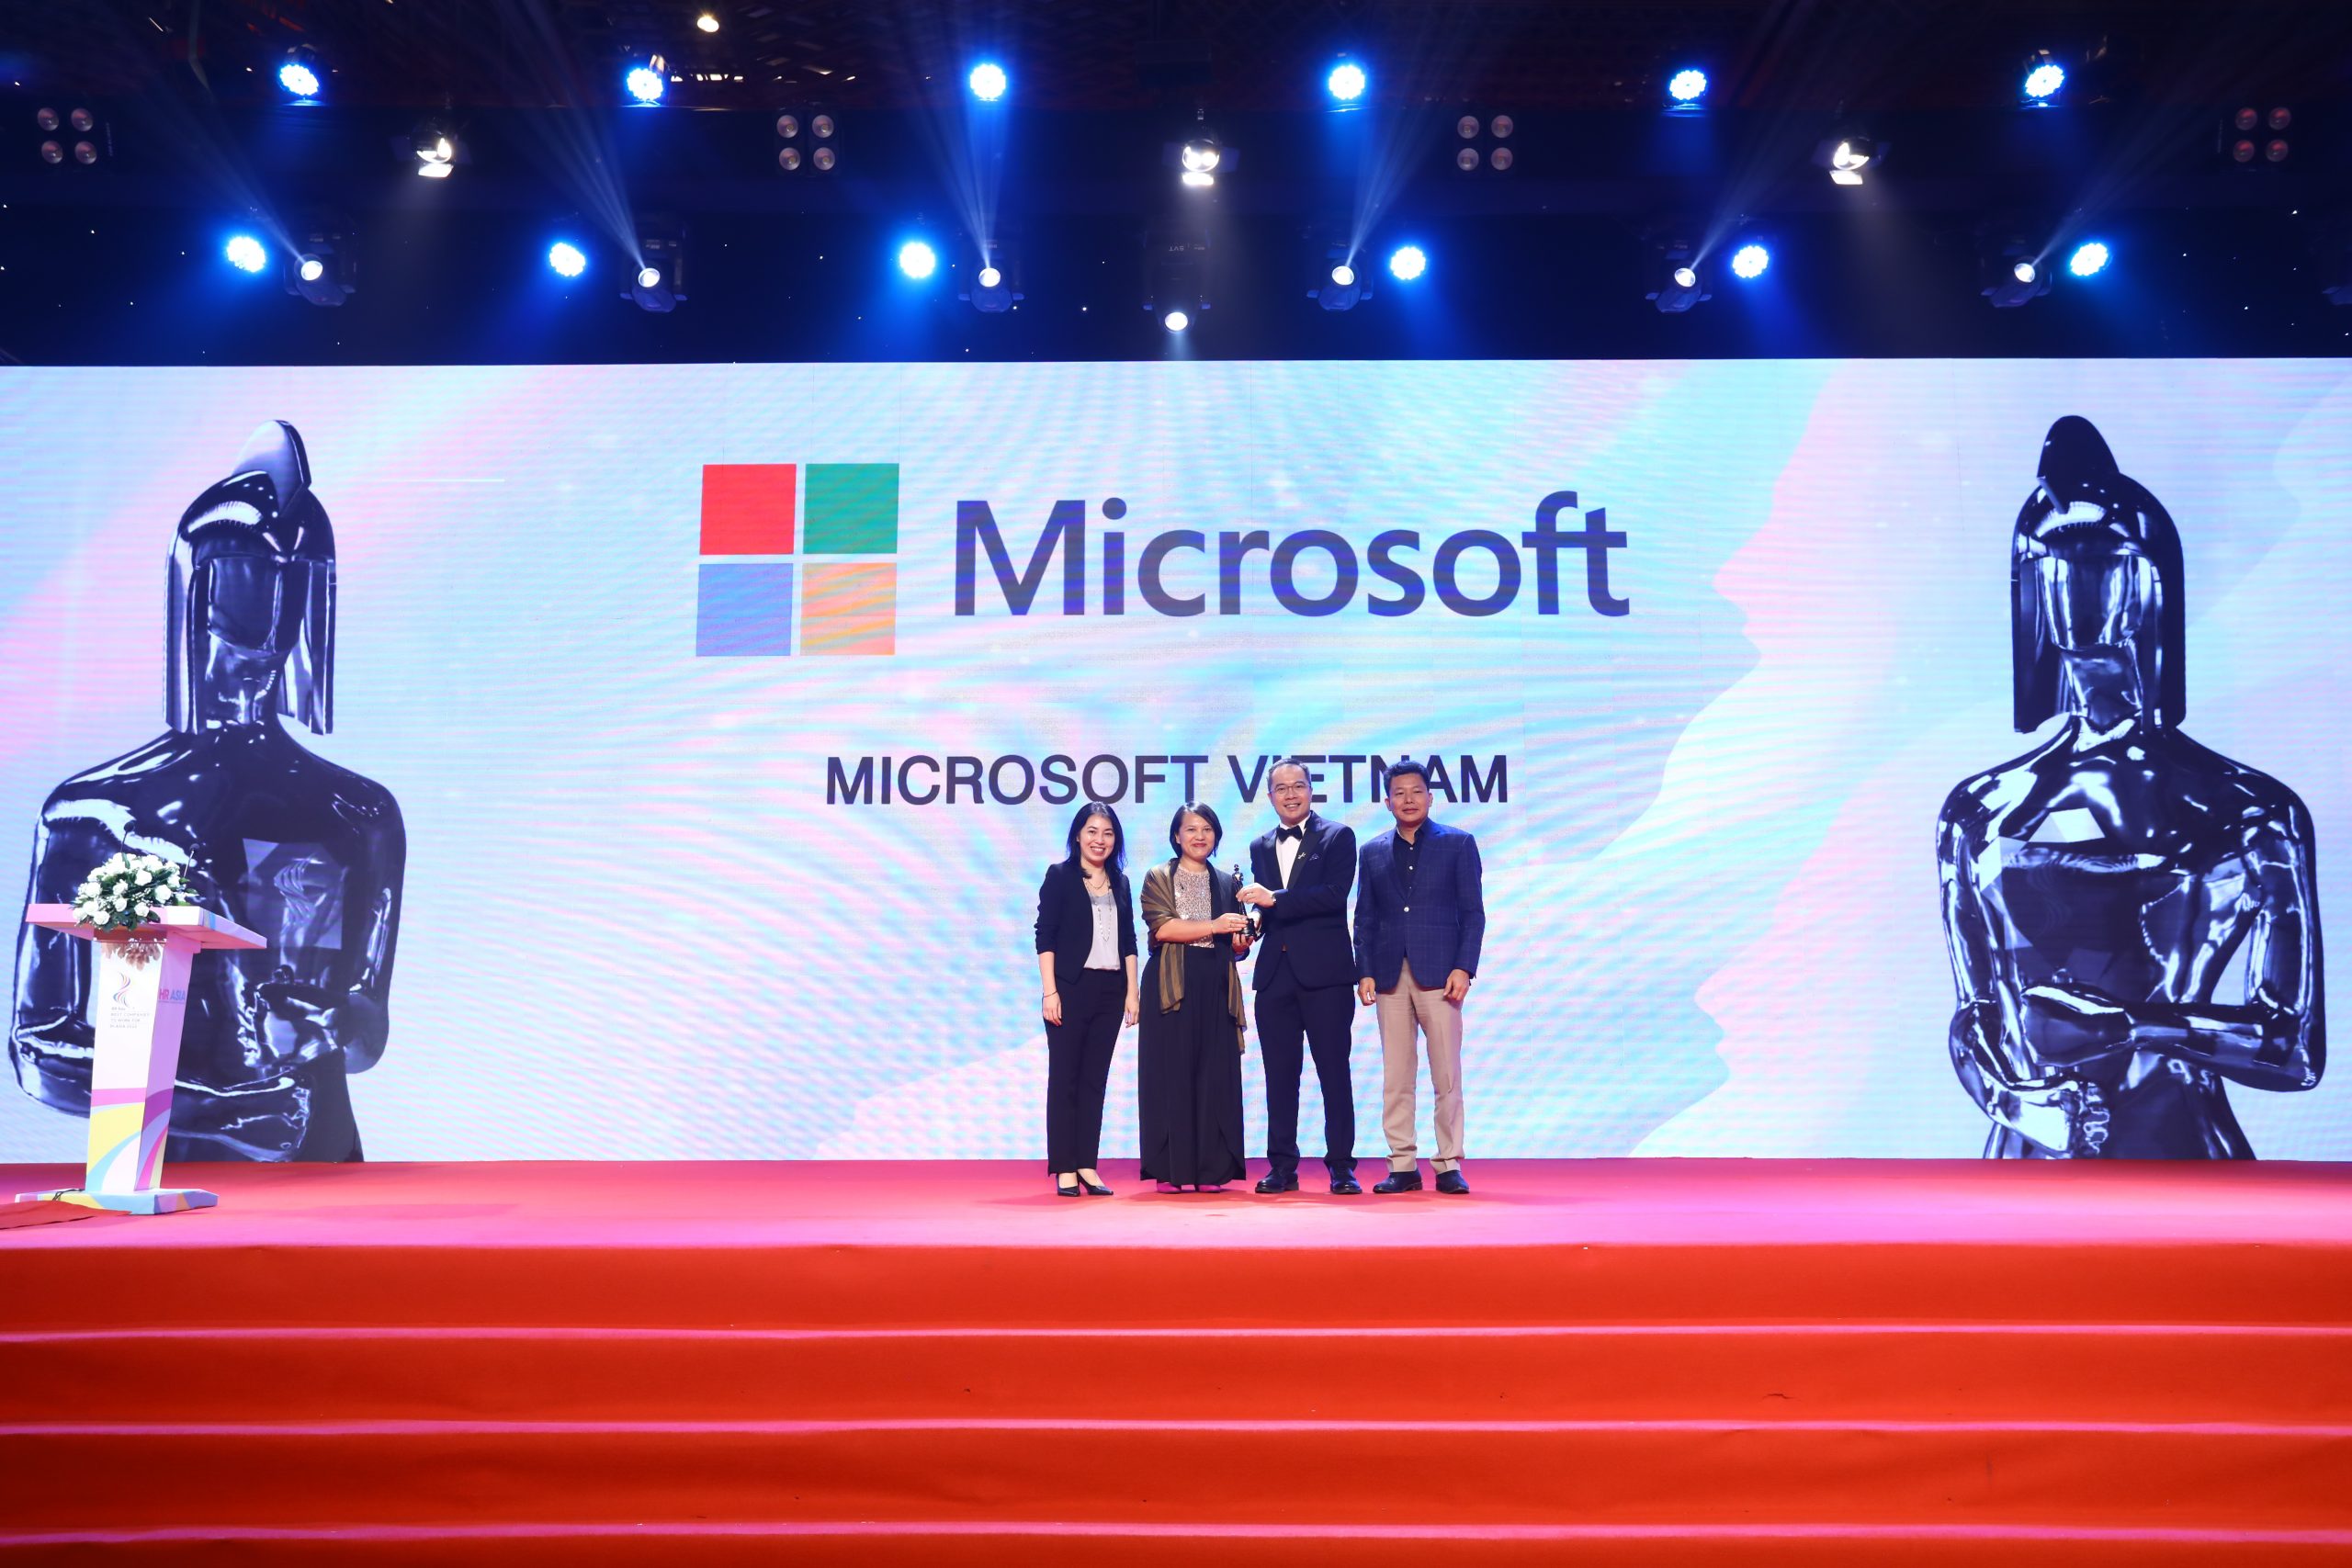 Microsoft Vietnam event